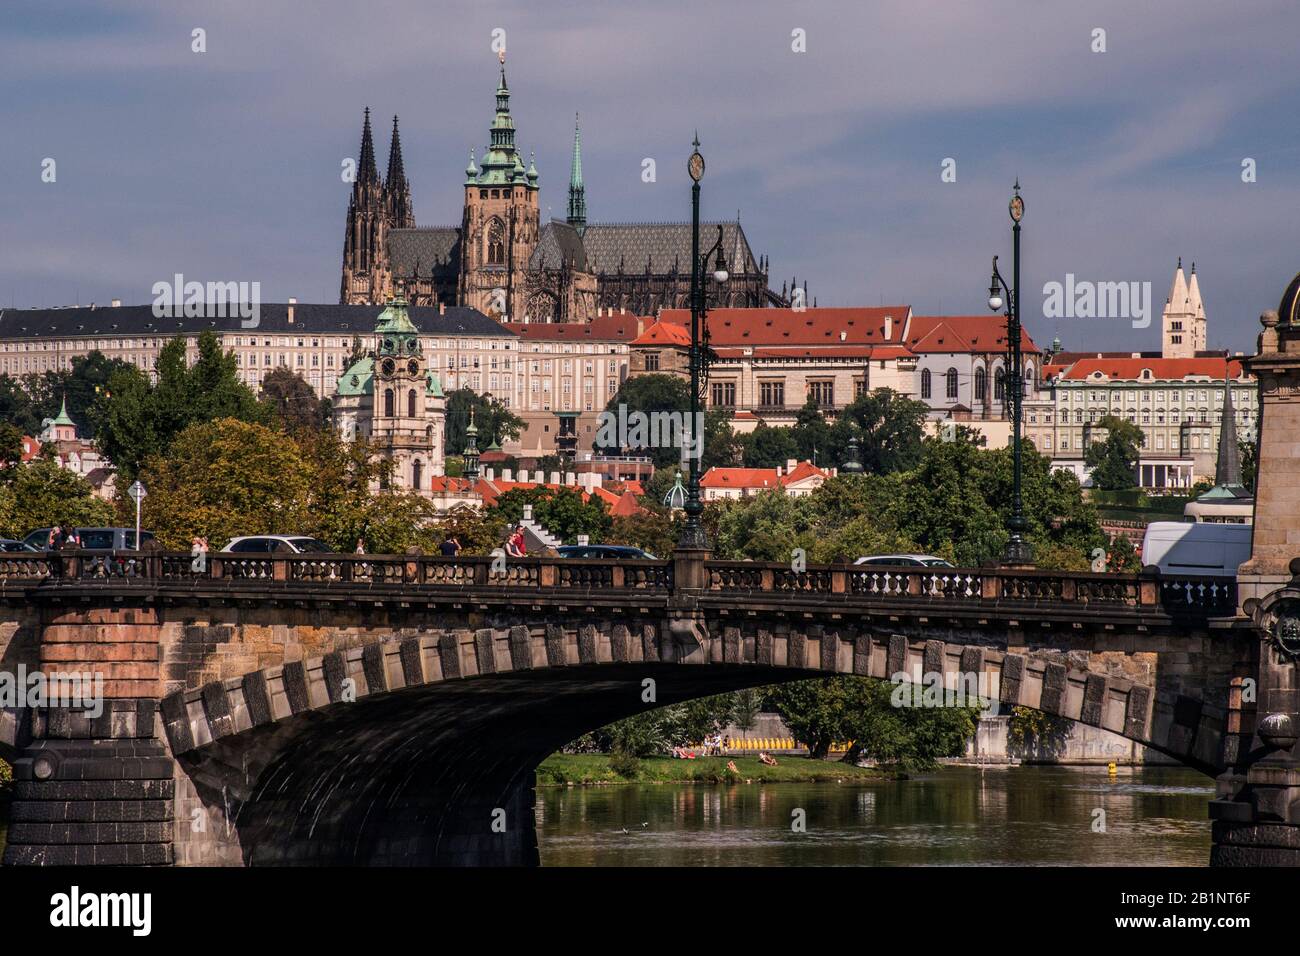 Charles Bridge Over Vltava River In City Of Prague Czech Republic Stock Photo